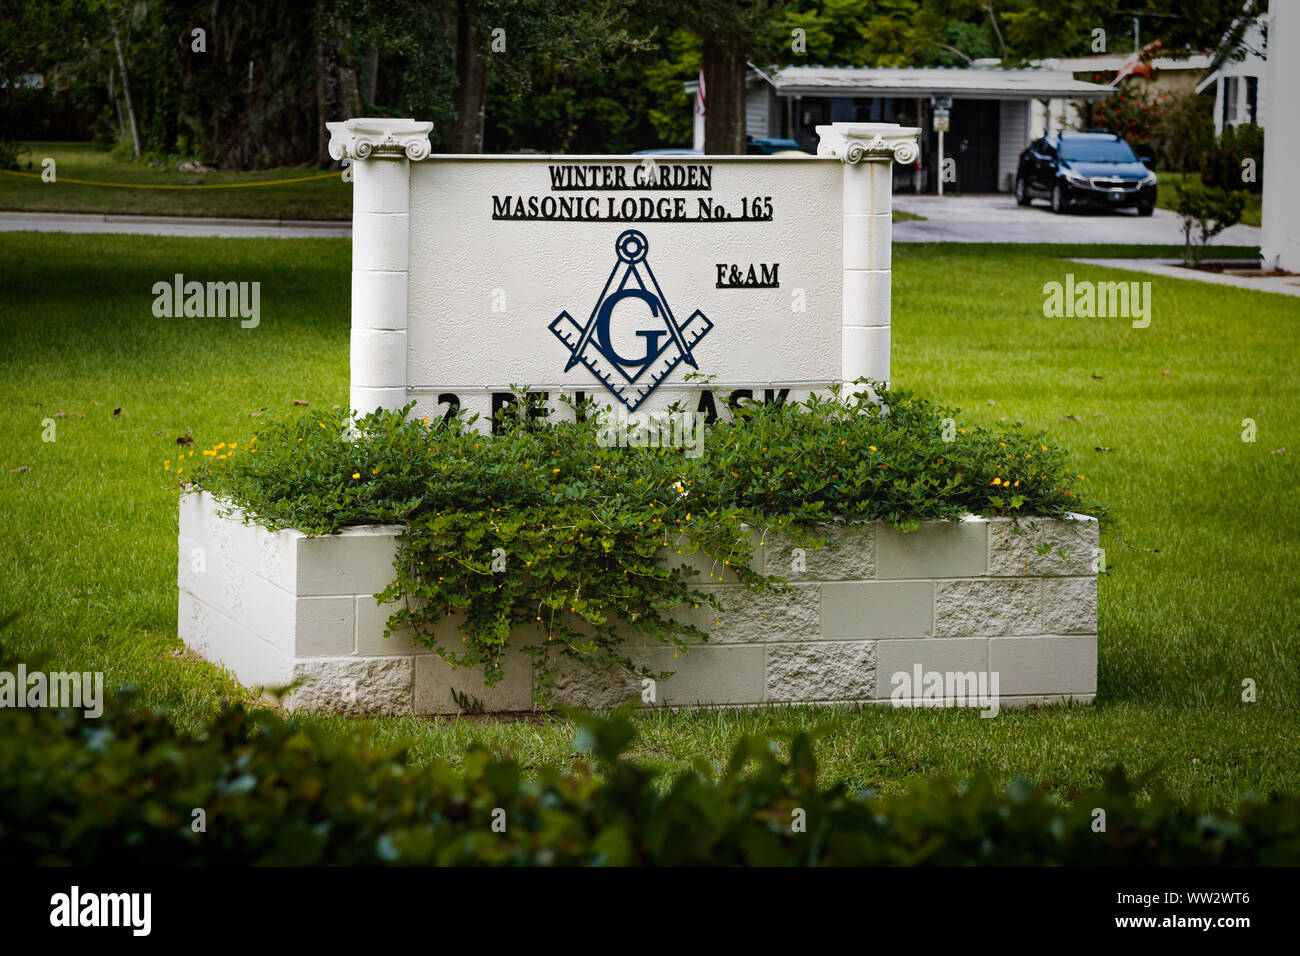 Masonic Lodge Number 165 grounds sign, Winter Garden, Florida Stock Photo